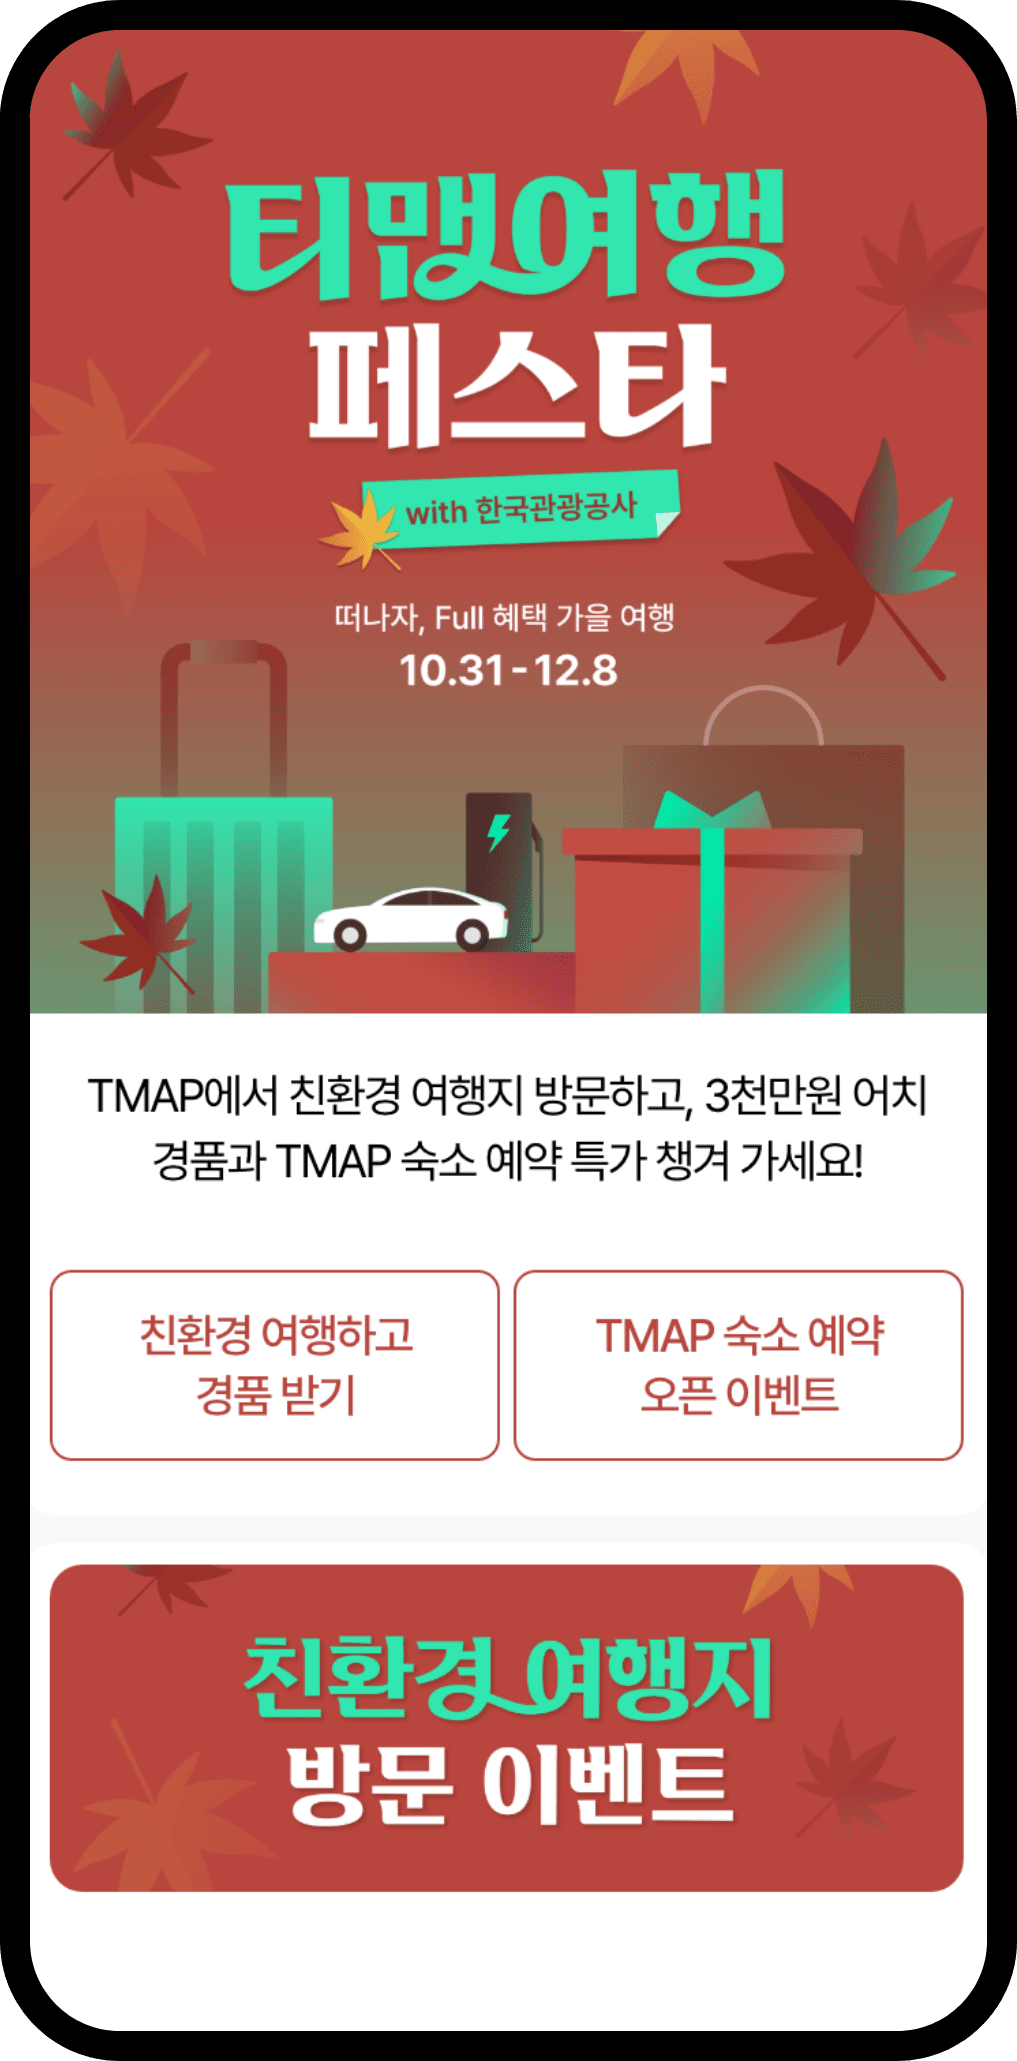 TMAP 여행페스타 이벤트 페이지 미리보기 01